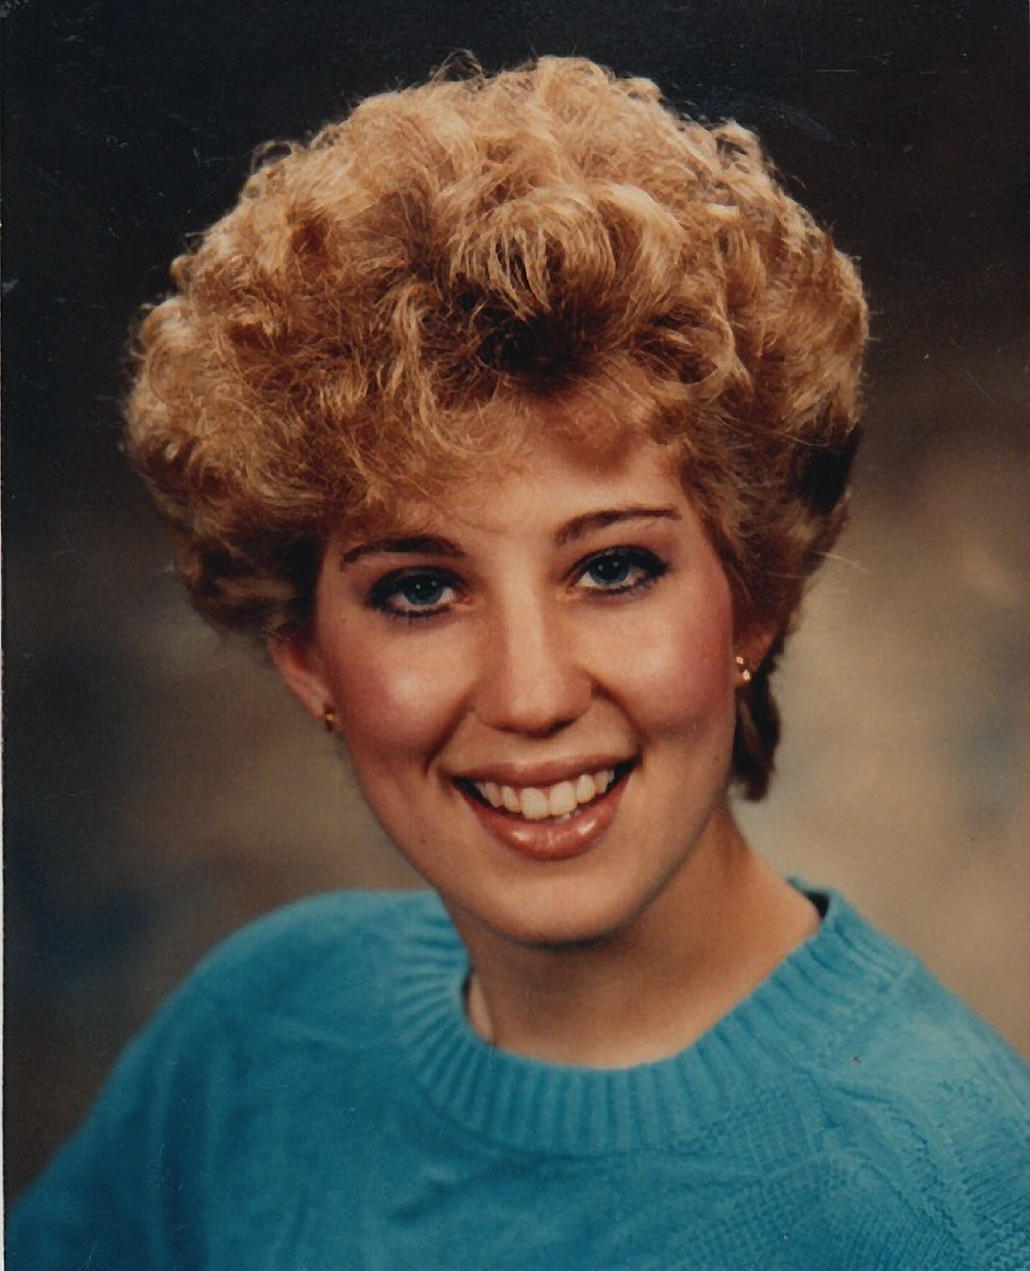 Angela Brosso, taken in Nov. 1988 - Age 18 for her Cedar Cliff High School senior pictures.